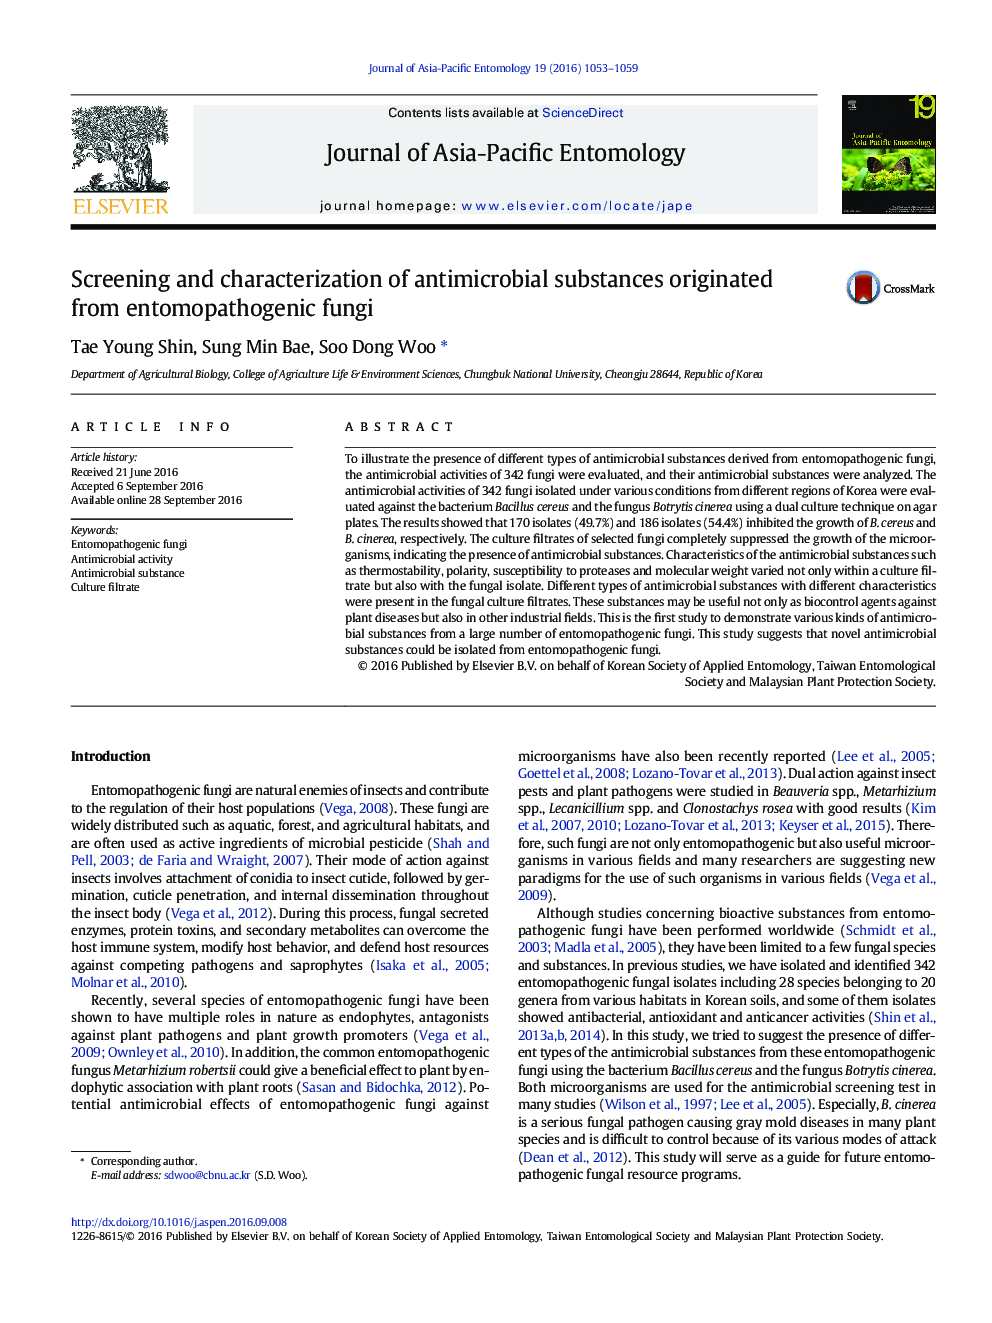 Screening and characterization of antimicrobial substances originated from entomopathogenic fungi